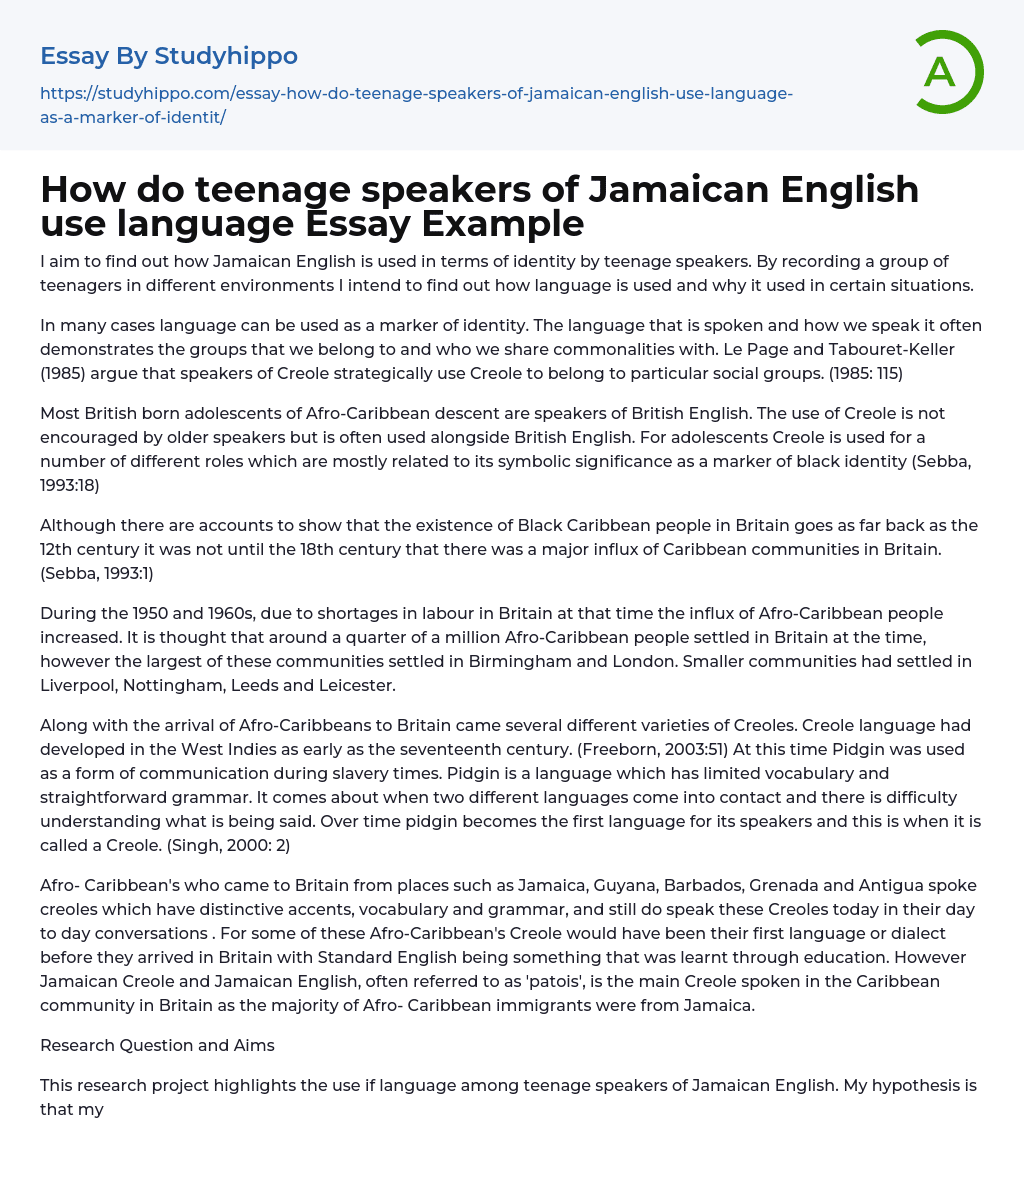 How do teenage speakers of Jamaican English use language Essay Example